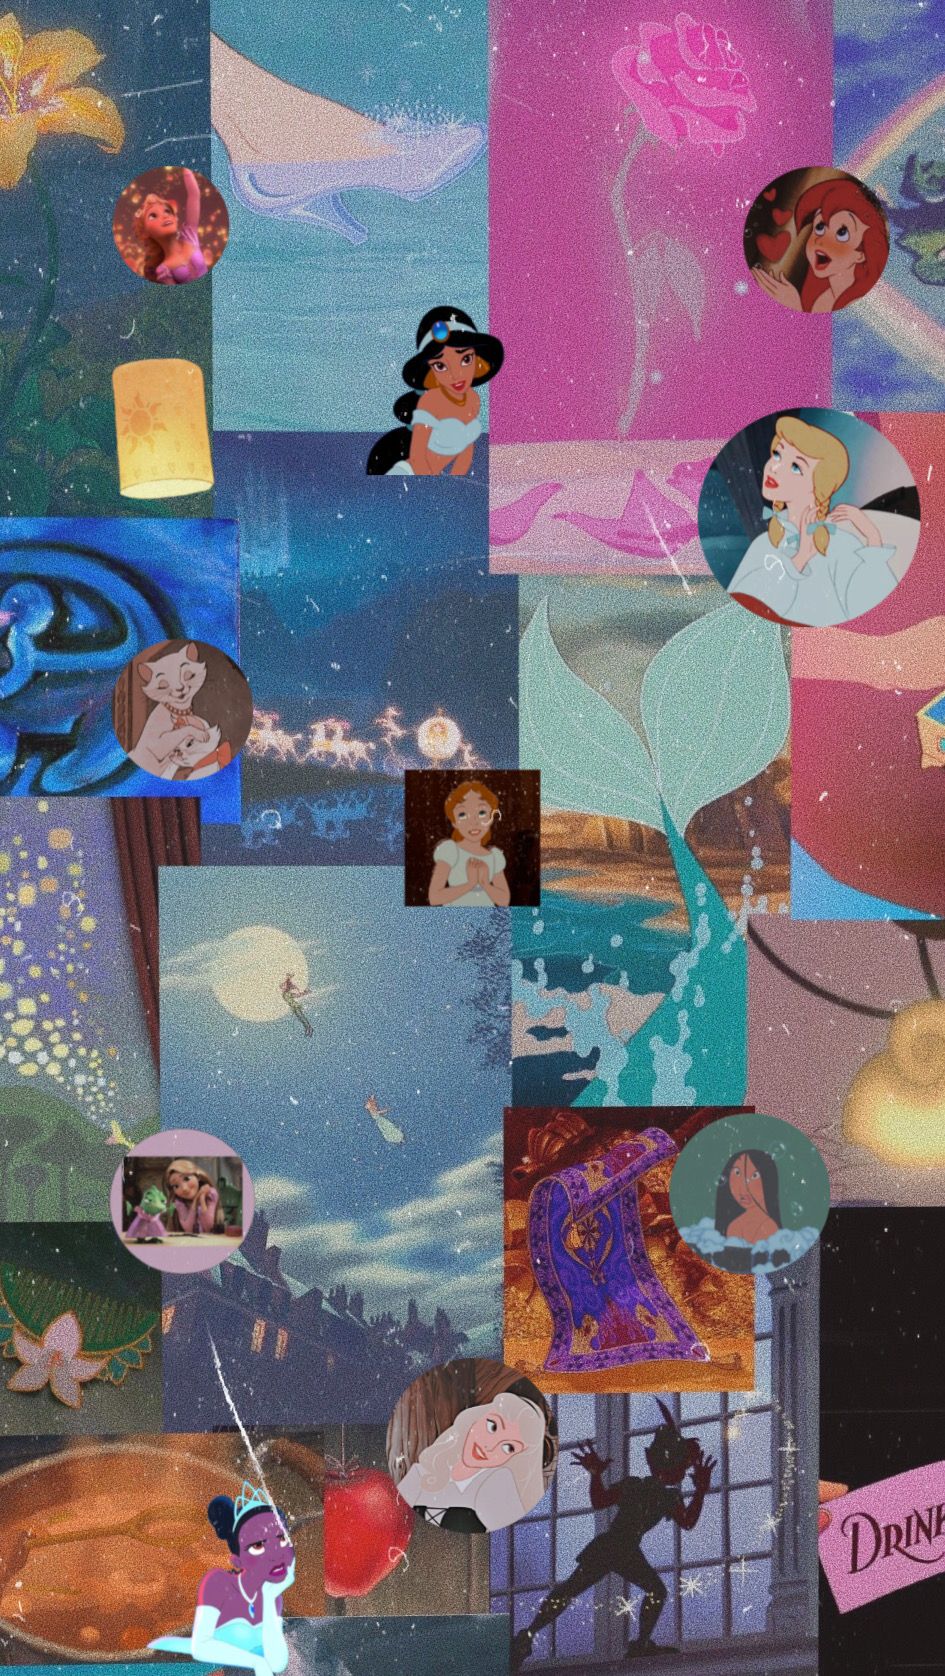 Disney icons aesthetic wallpaper. Disneyland iphone wallpaper, Wallpaper iphone disney, iPhone wallpaper tumblr aesthetic